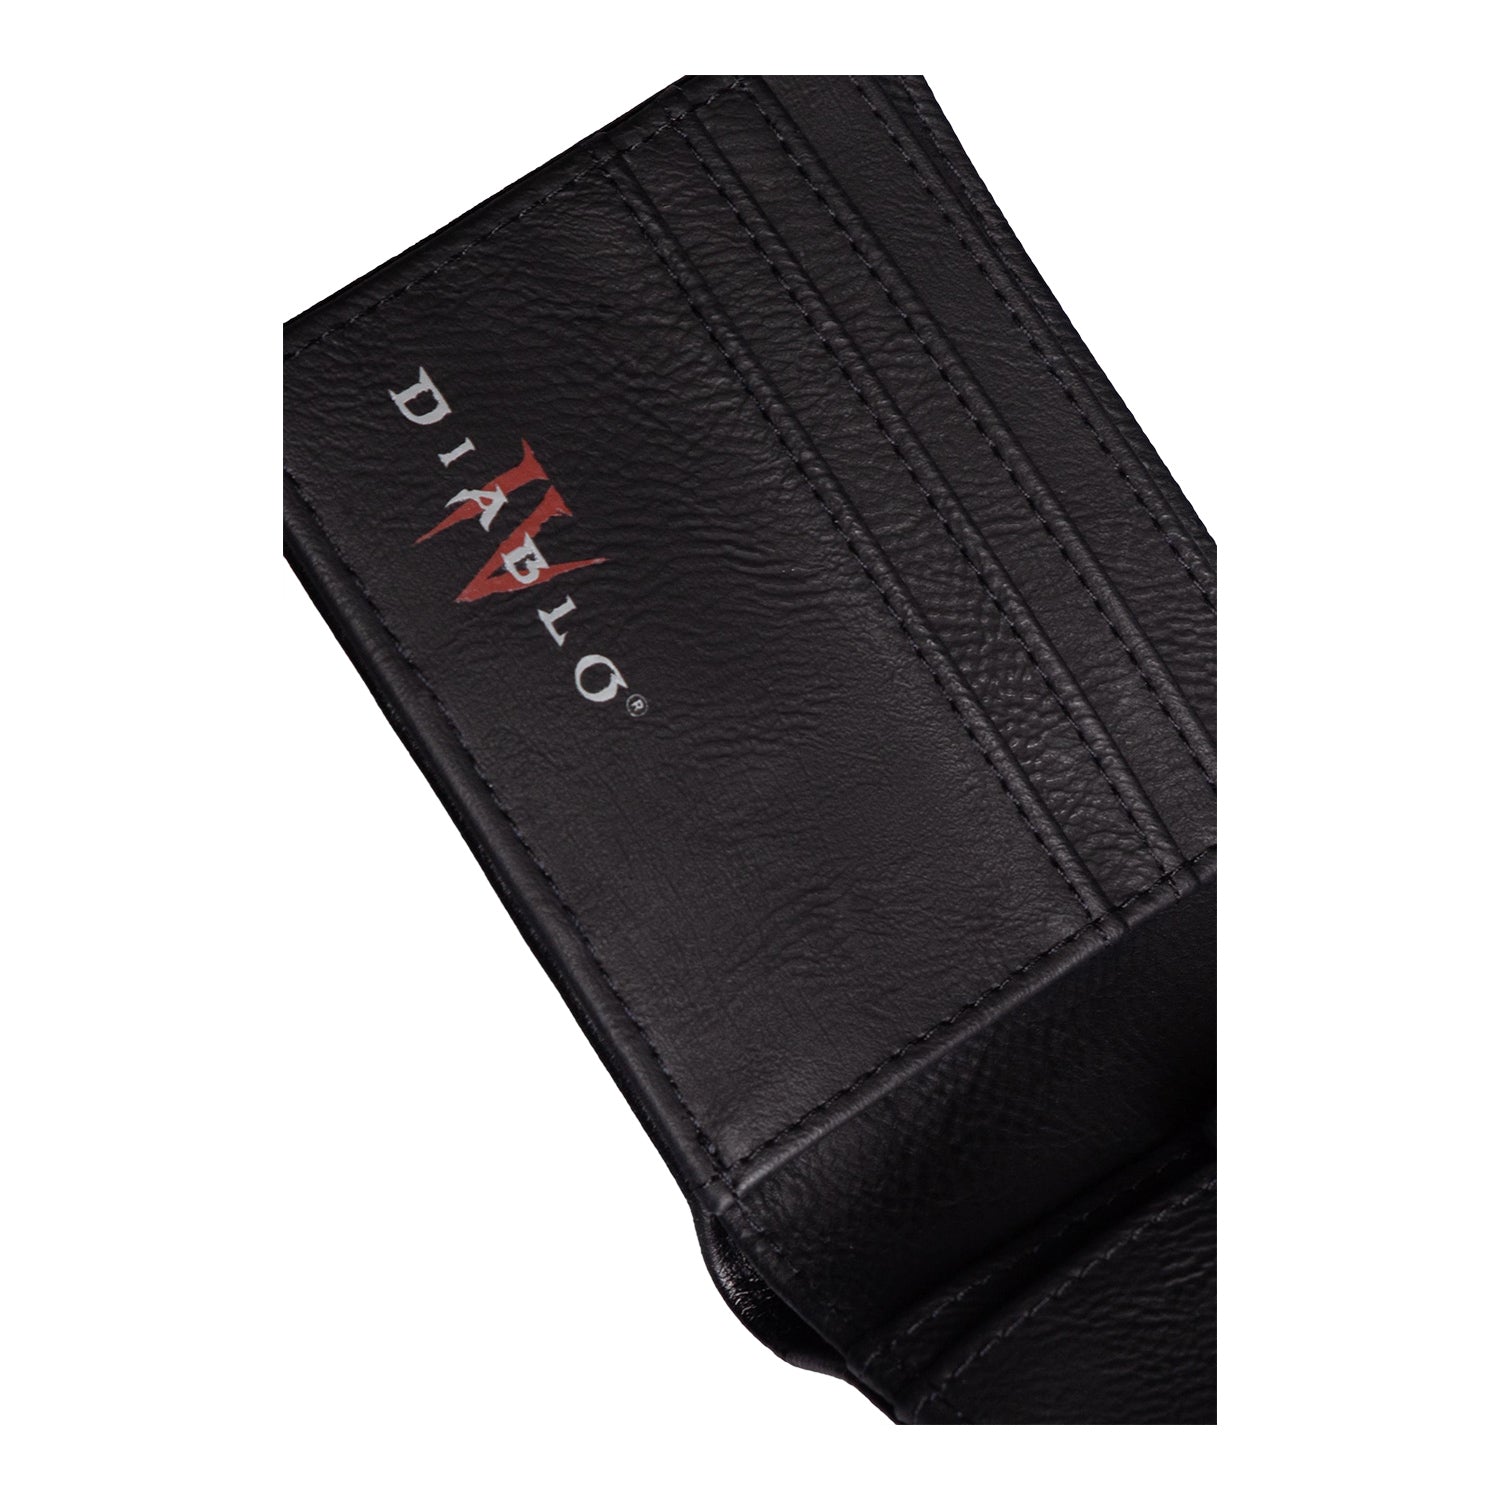 Diablo IV Black Bifold Wallet - Open View w/ Diablo Logo